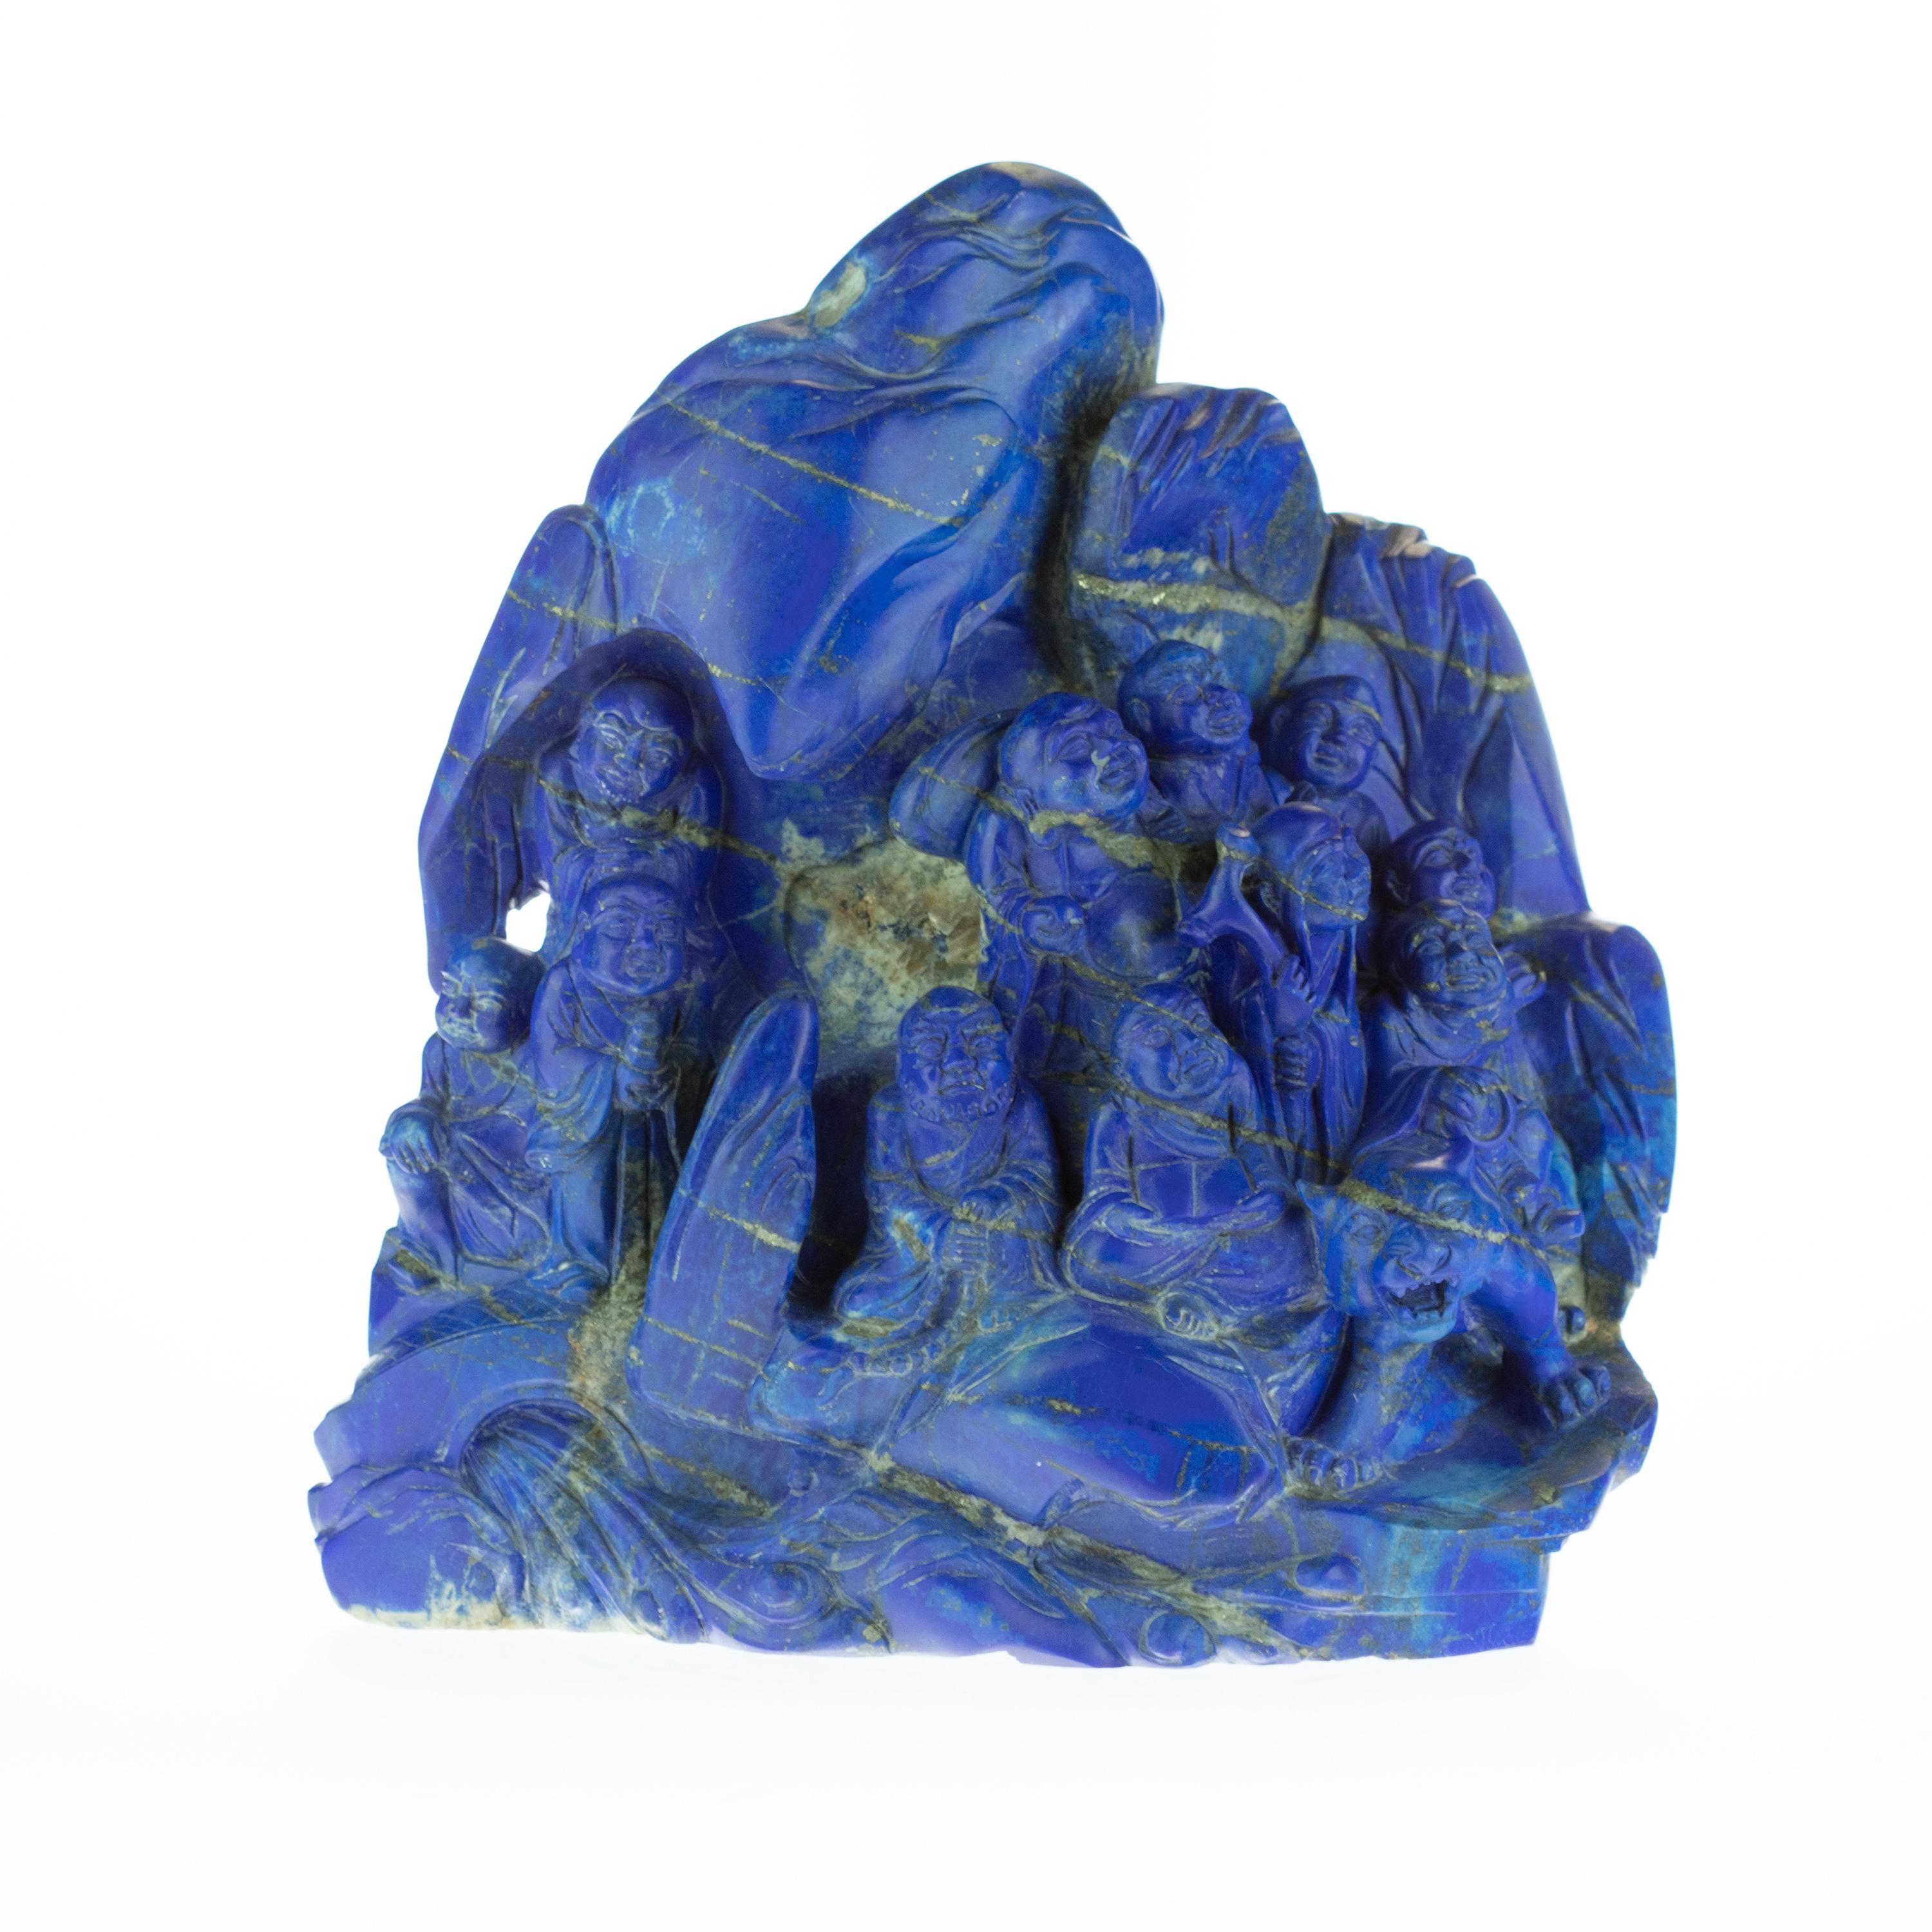 Chinese Export Lapis Lazuli Eighteen Wise Men Figurine Carved Handmade Artisan Statue Sculpture For Sale